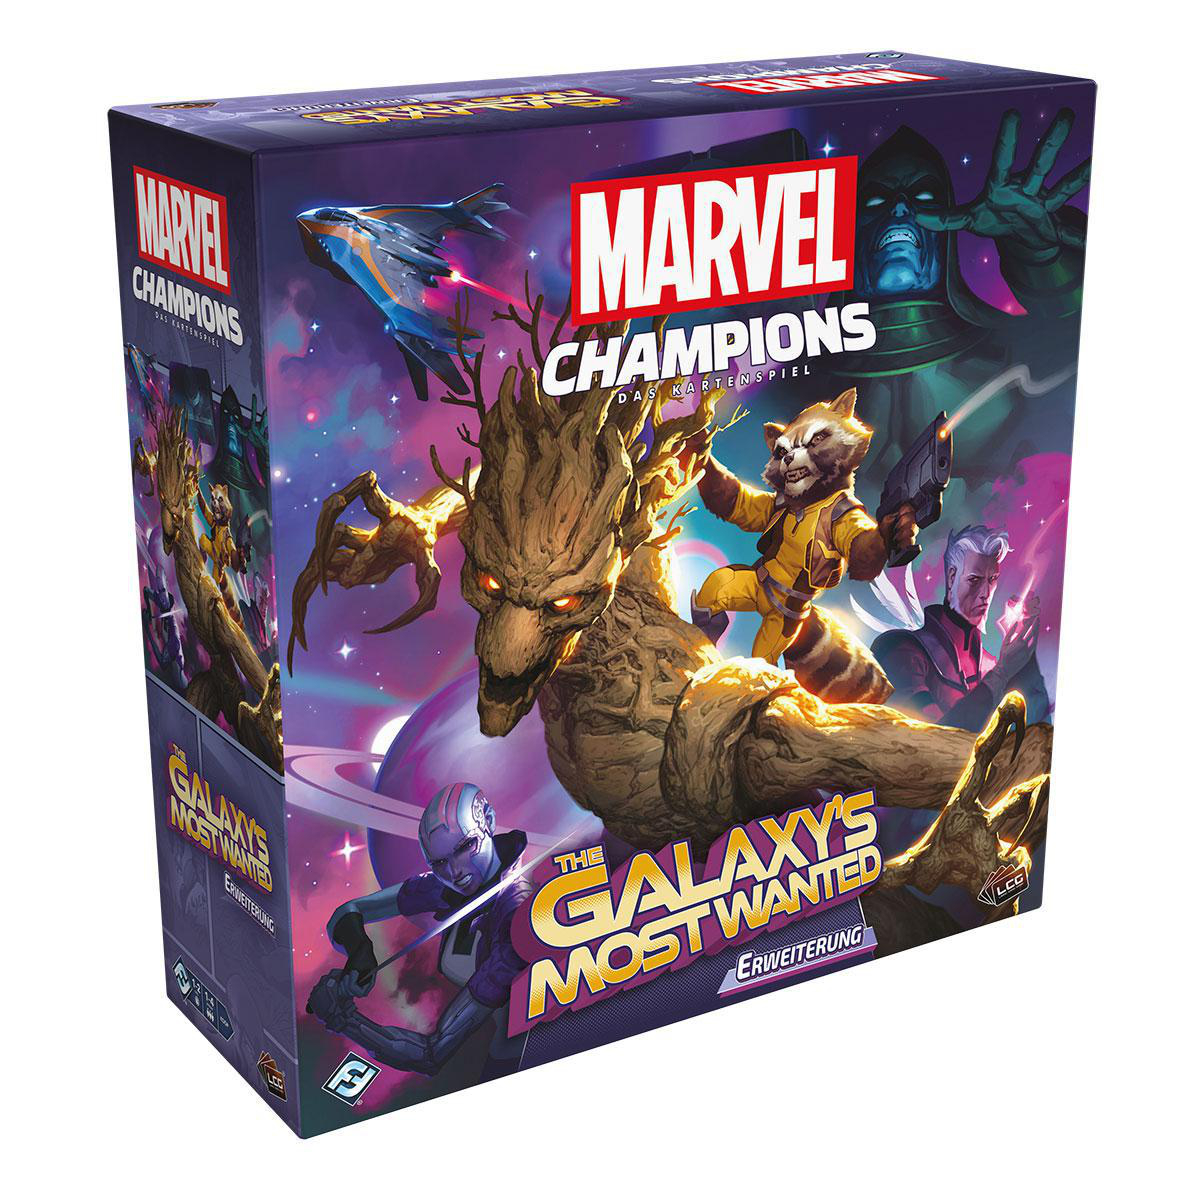 Gesellschaftsspiel GAMES Marvel Mehrfarbig FANTASY Wanted Das Most - Champions Galaxy\'s Kartenspiel FLIGHT